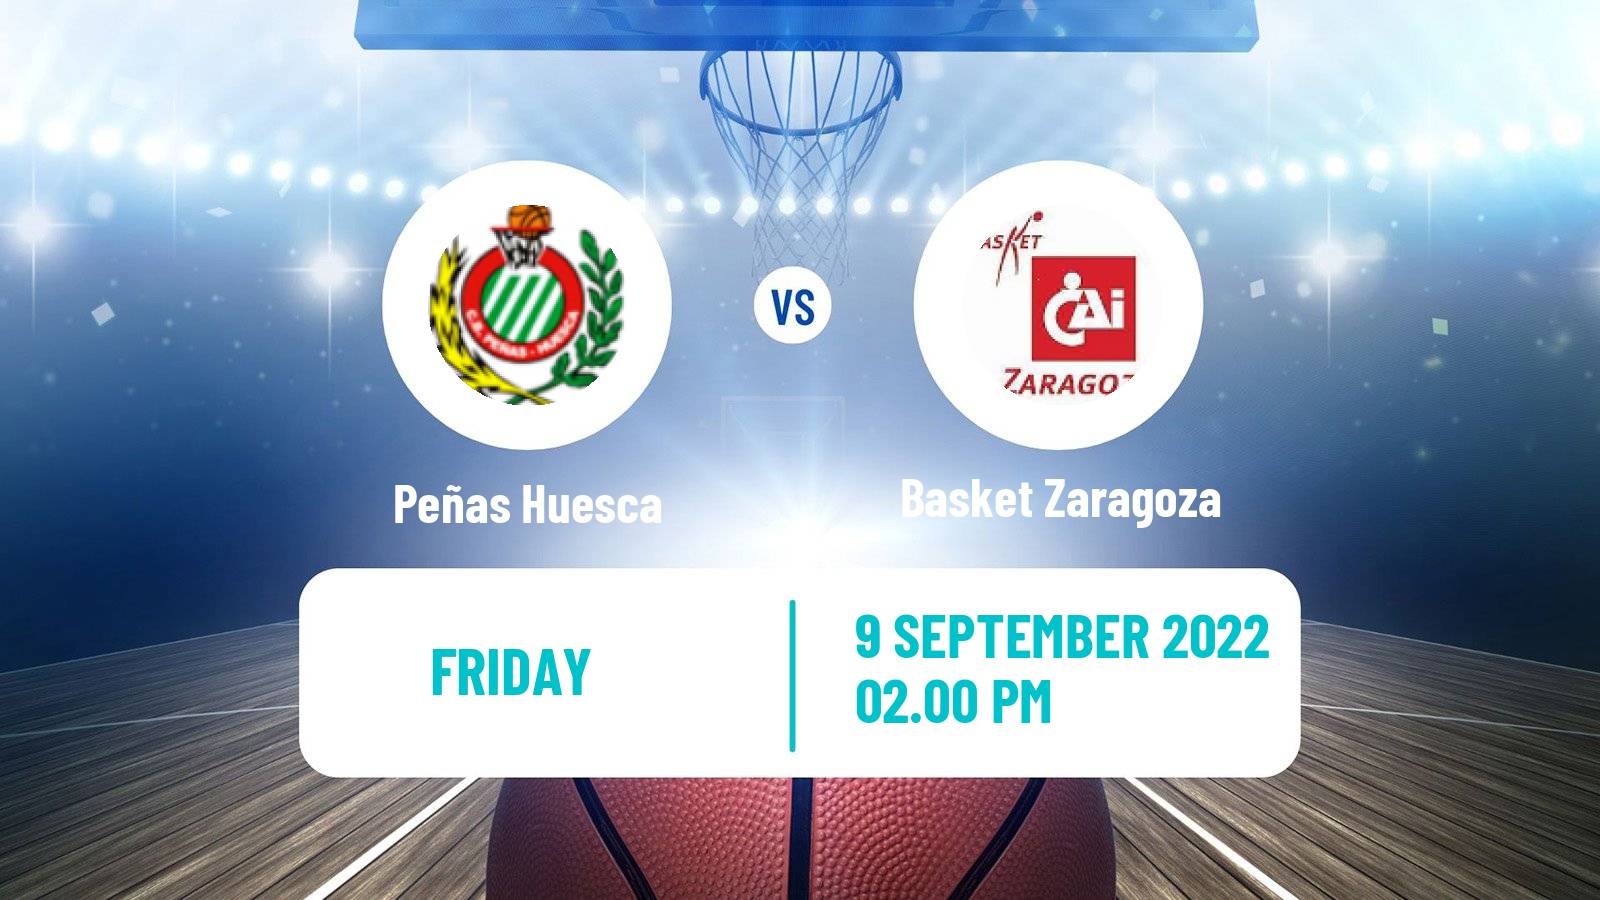 Basketball Club Friendly Basketball Peñas Huesca - Basket Zaragoza